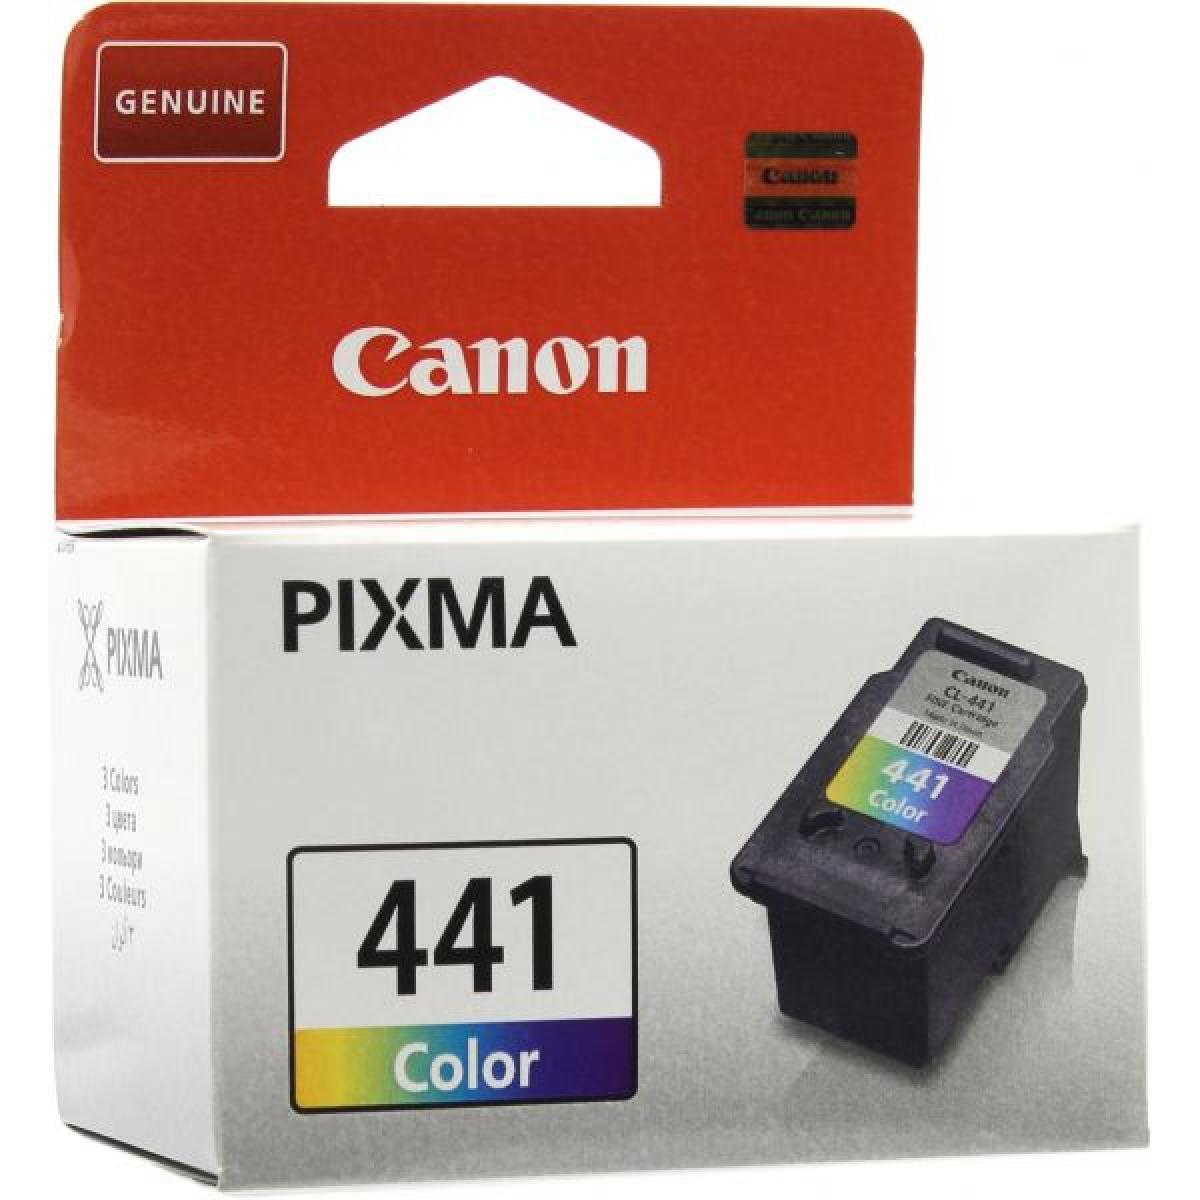 Canon Pixma CL-441 Color Ink Cartridge